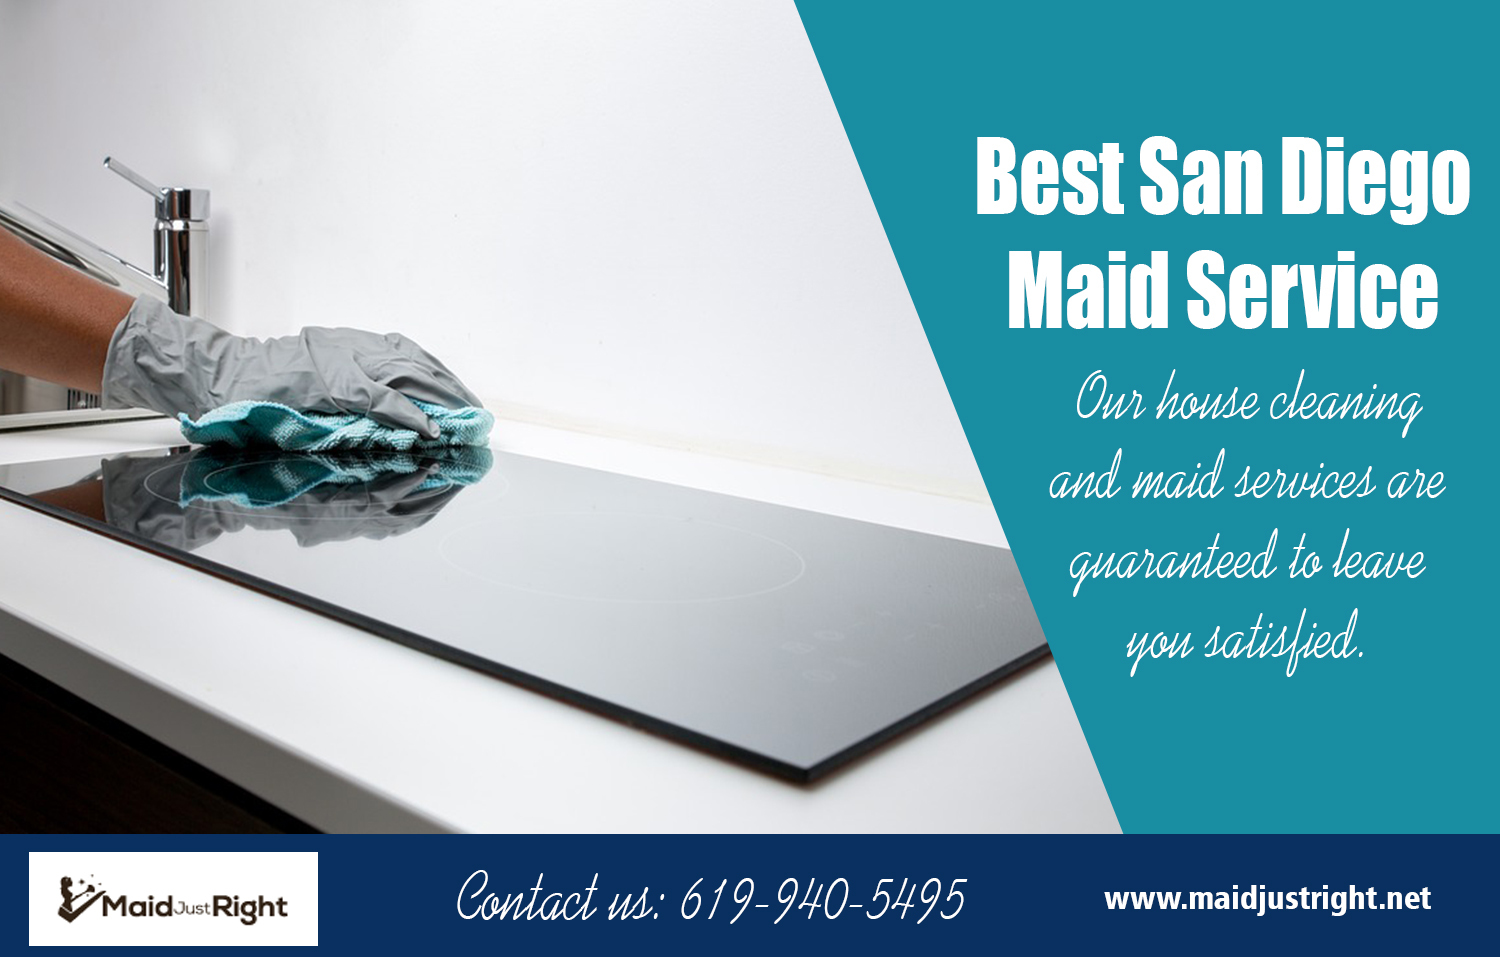 Best San Diego Maid Service | Call Us - 619-940-5495 | maidjustright.net